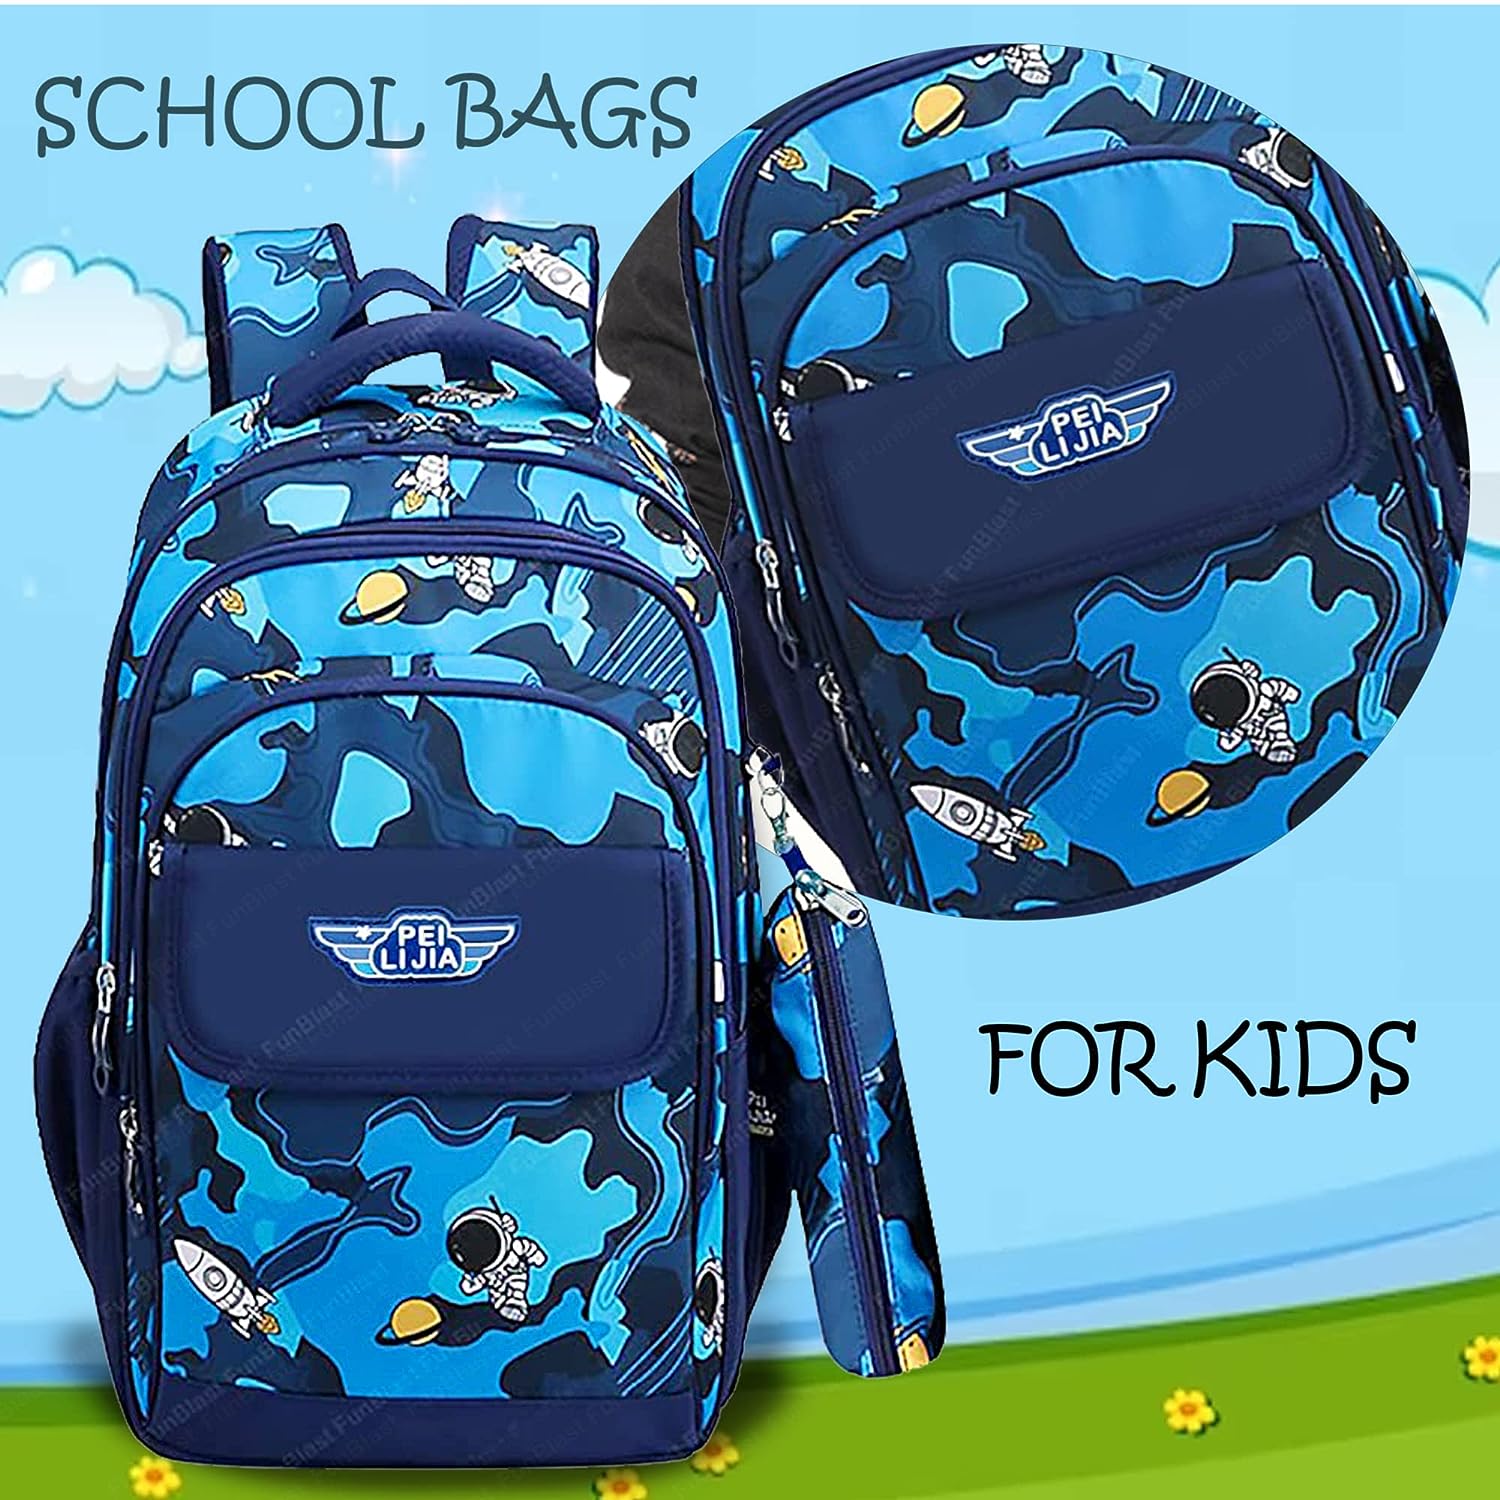 Choosing the Best Back-to-School Bag | Trespass Advice